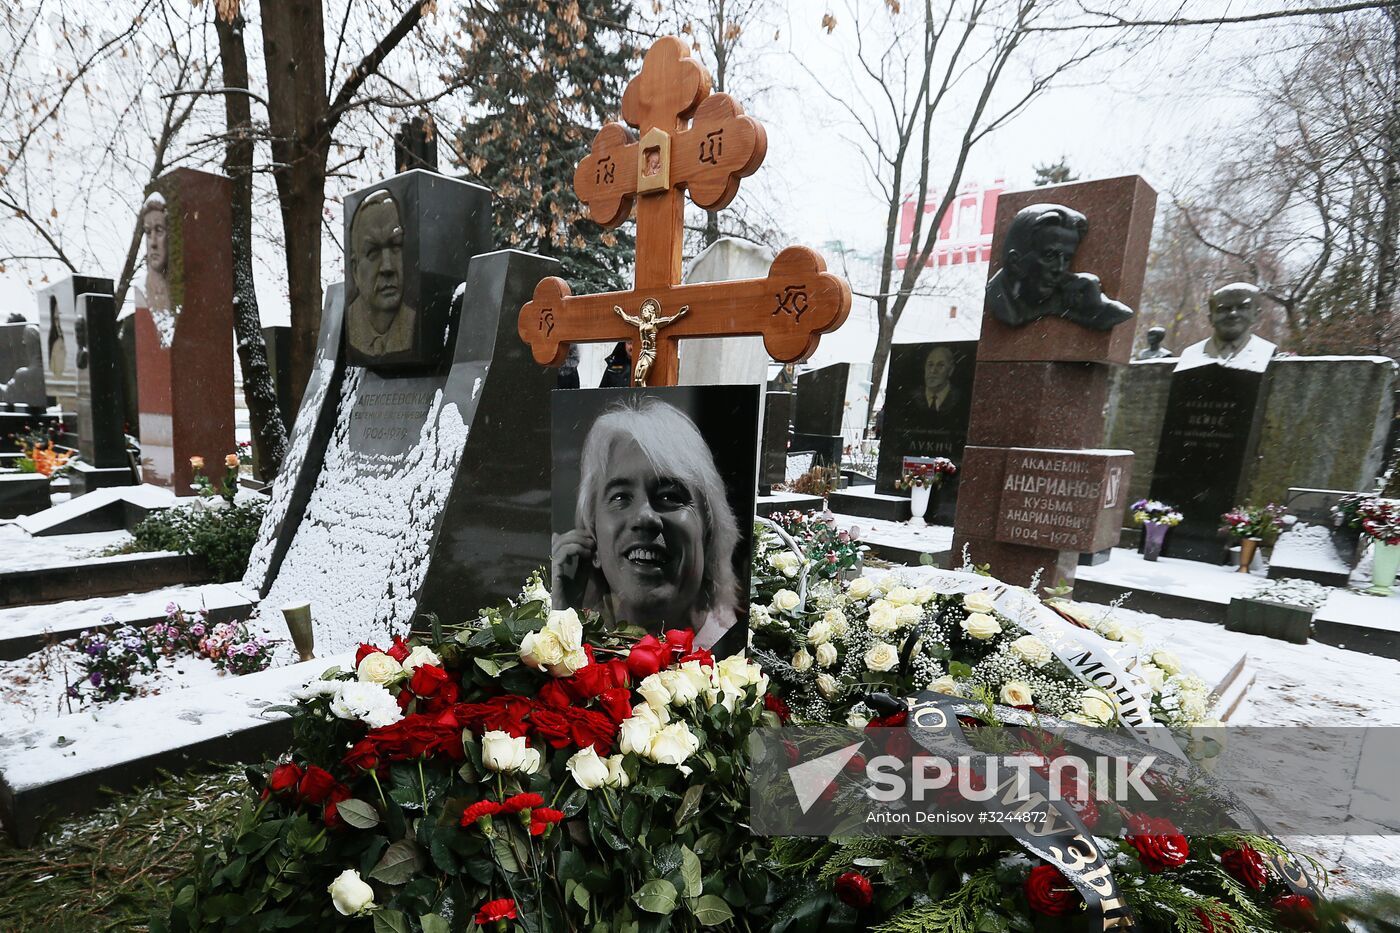 Dmitry Khovorostovsky's funeral in Novodevichye Cemetery